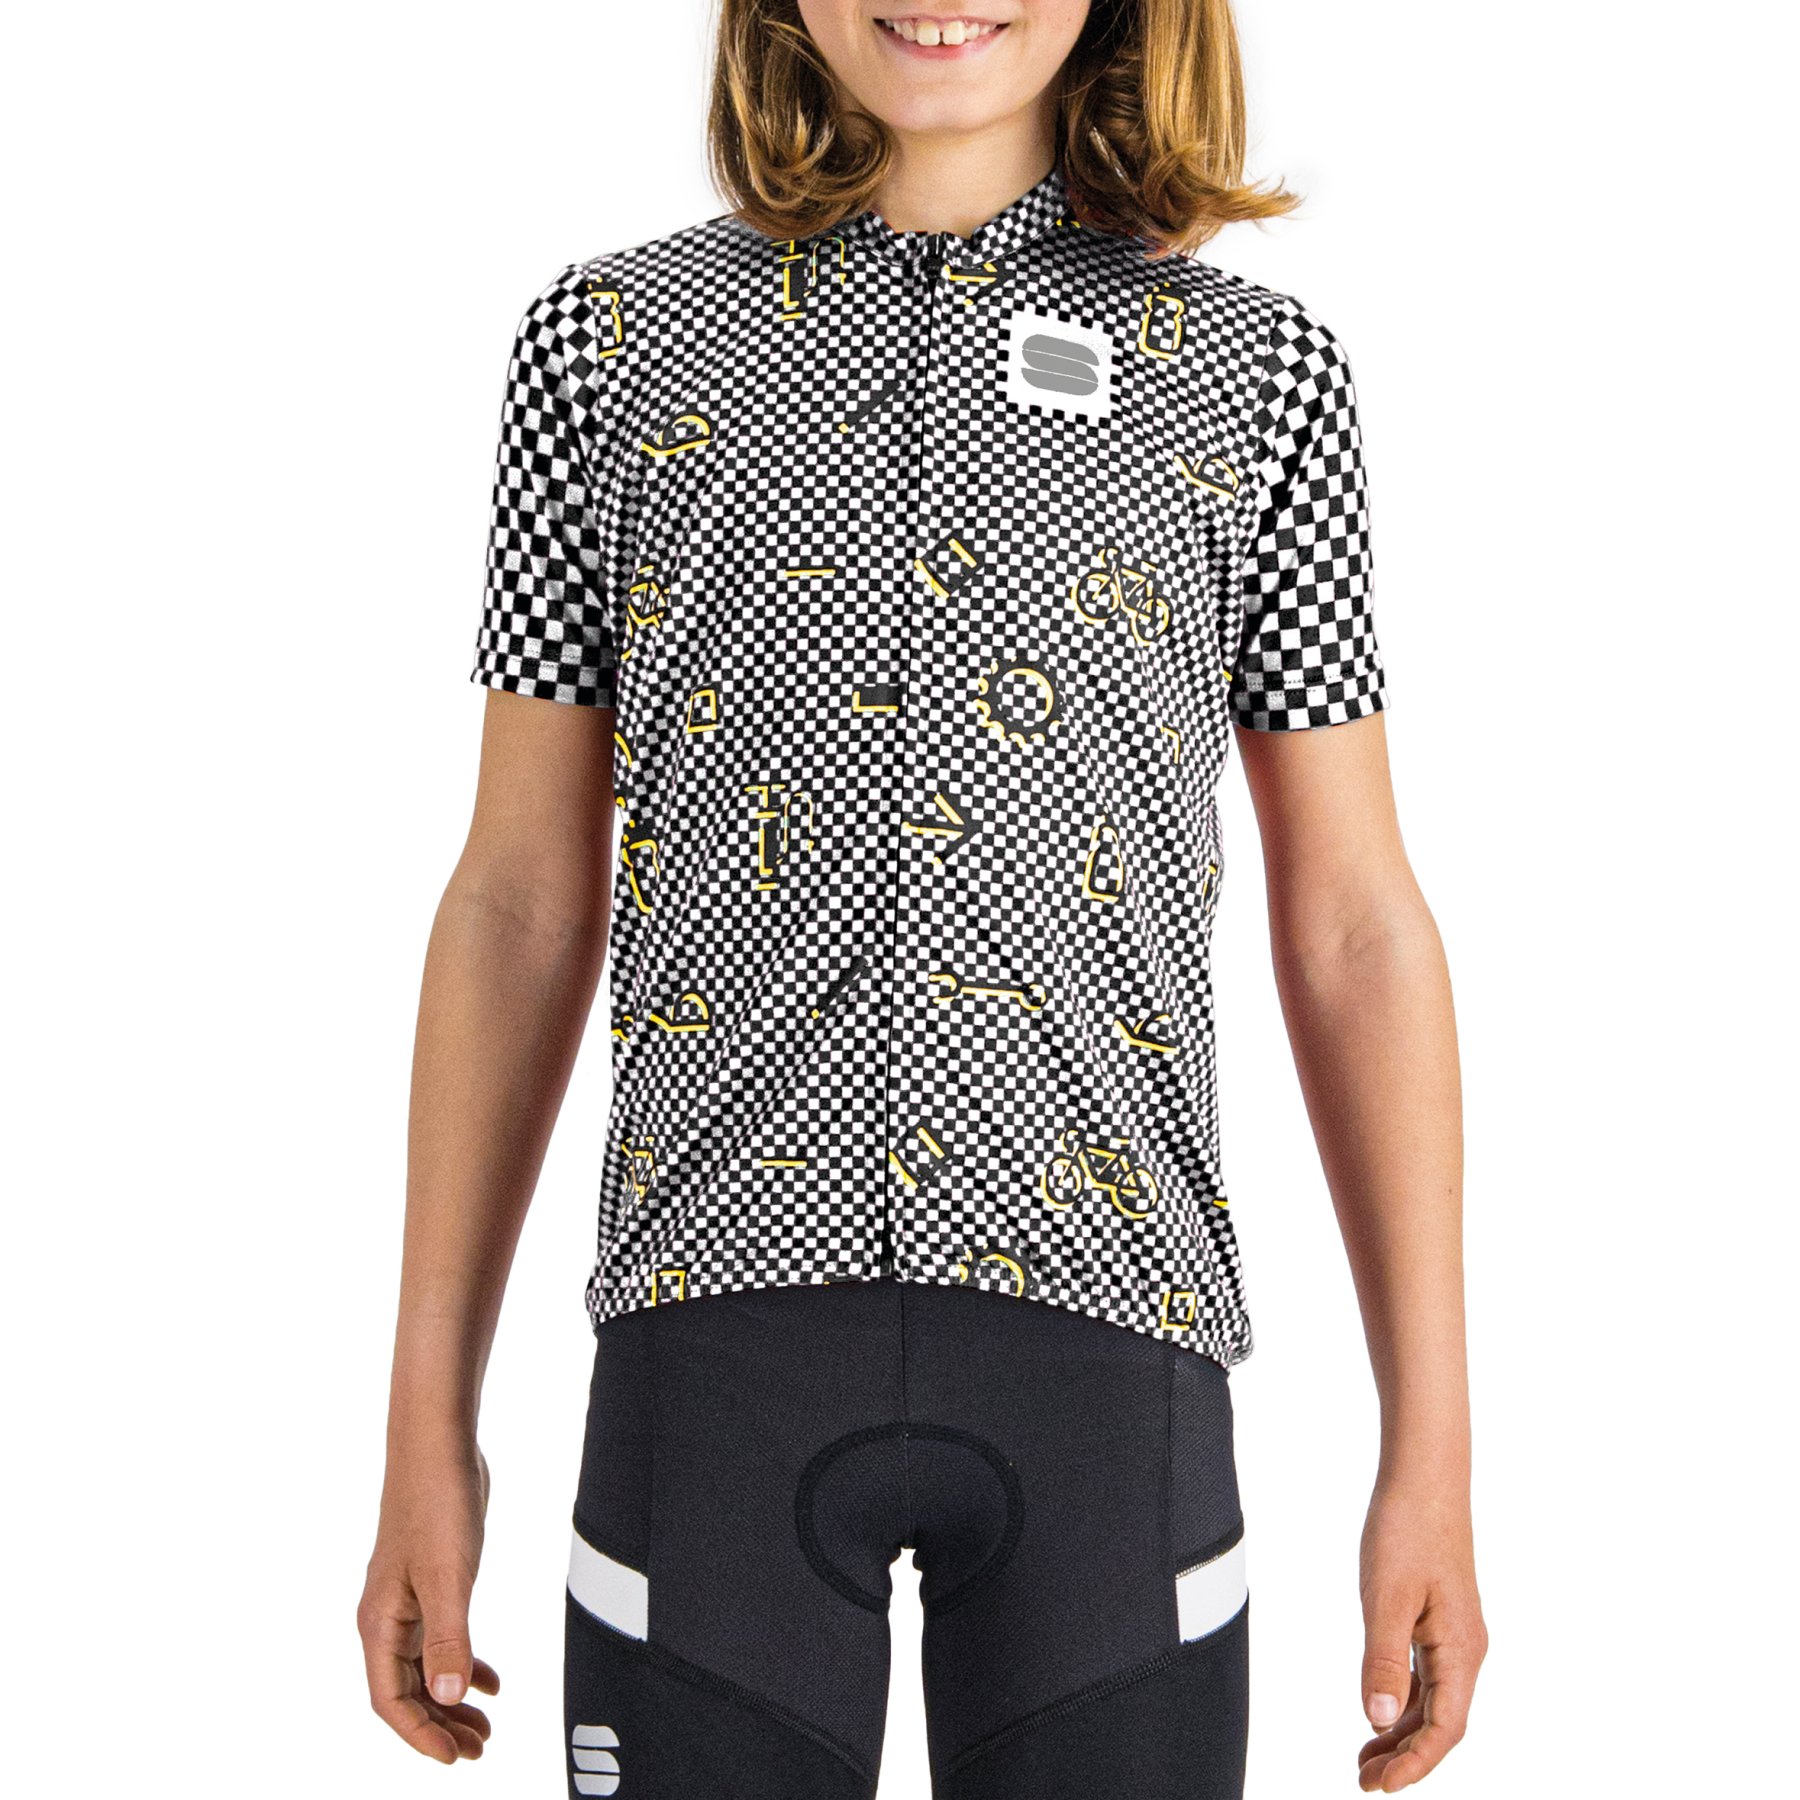 Productfoto van Sportful Checkmate Kindershirt - 102 Black/White/Cedar